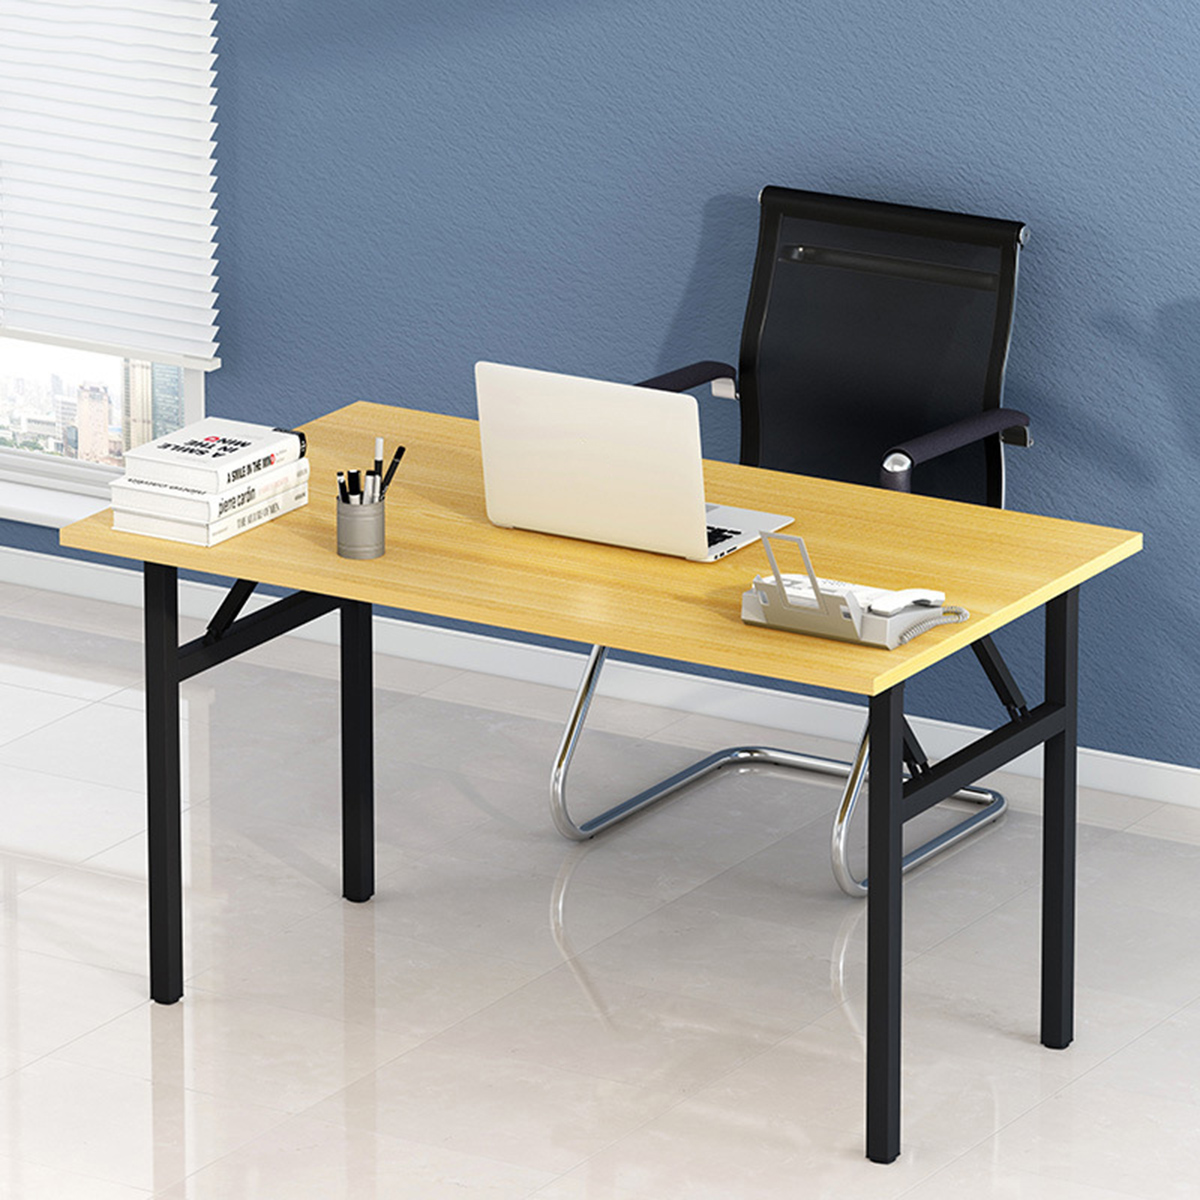 Foldable-Computer-Laptop-Desk-Writing-Study-Table-Desktop-Workstation-Home-Office-Furniture-1750804-8